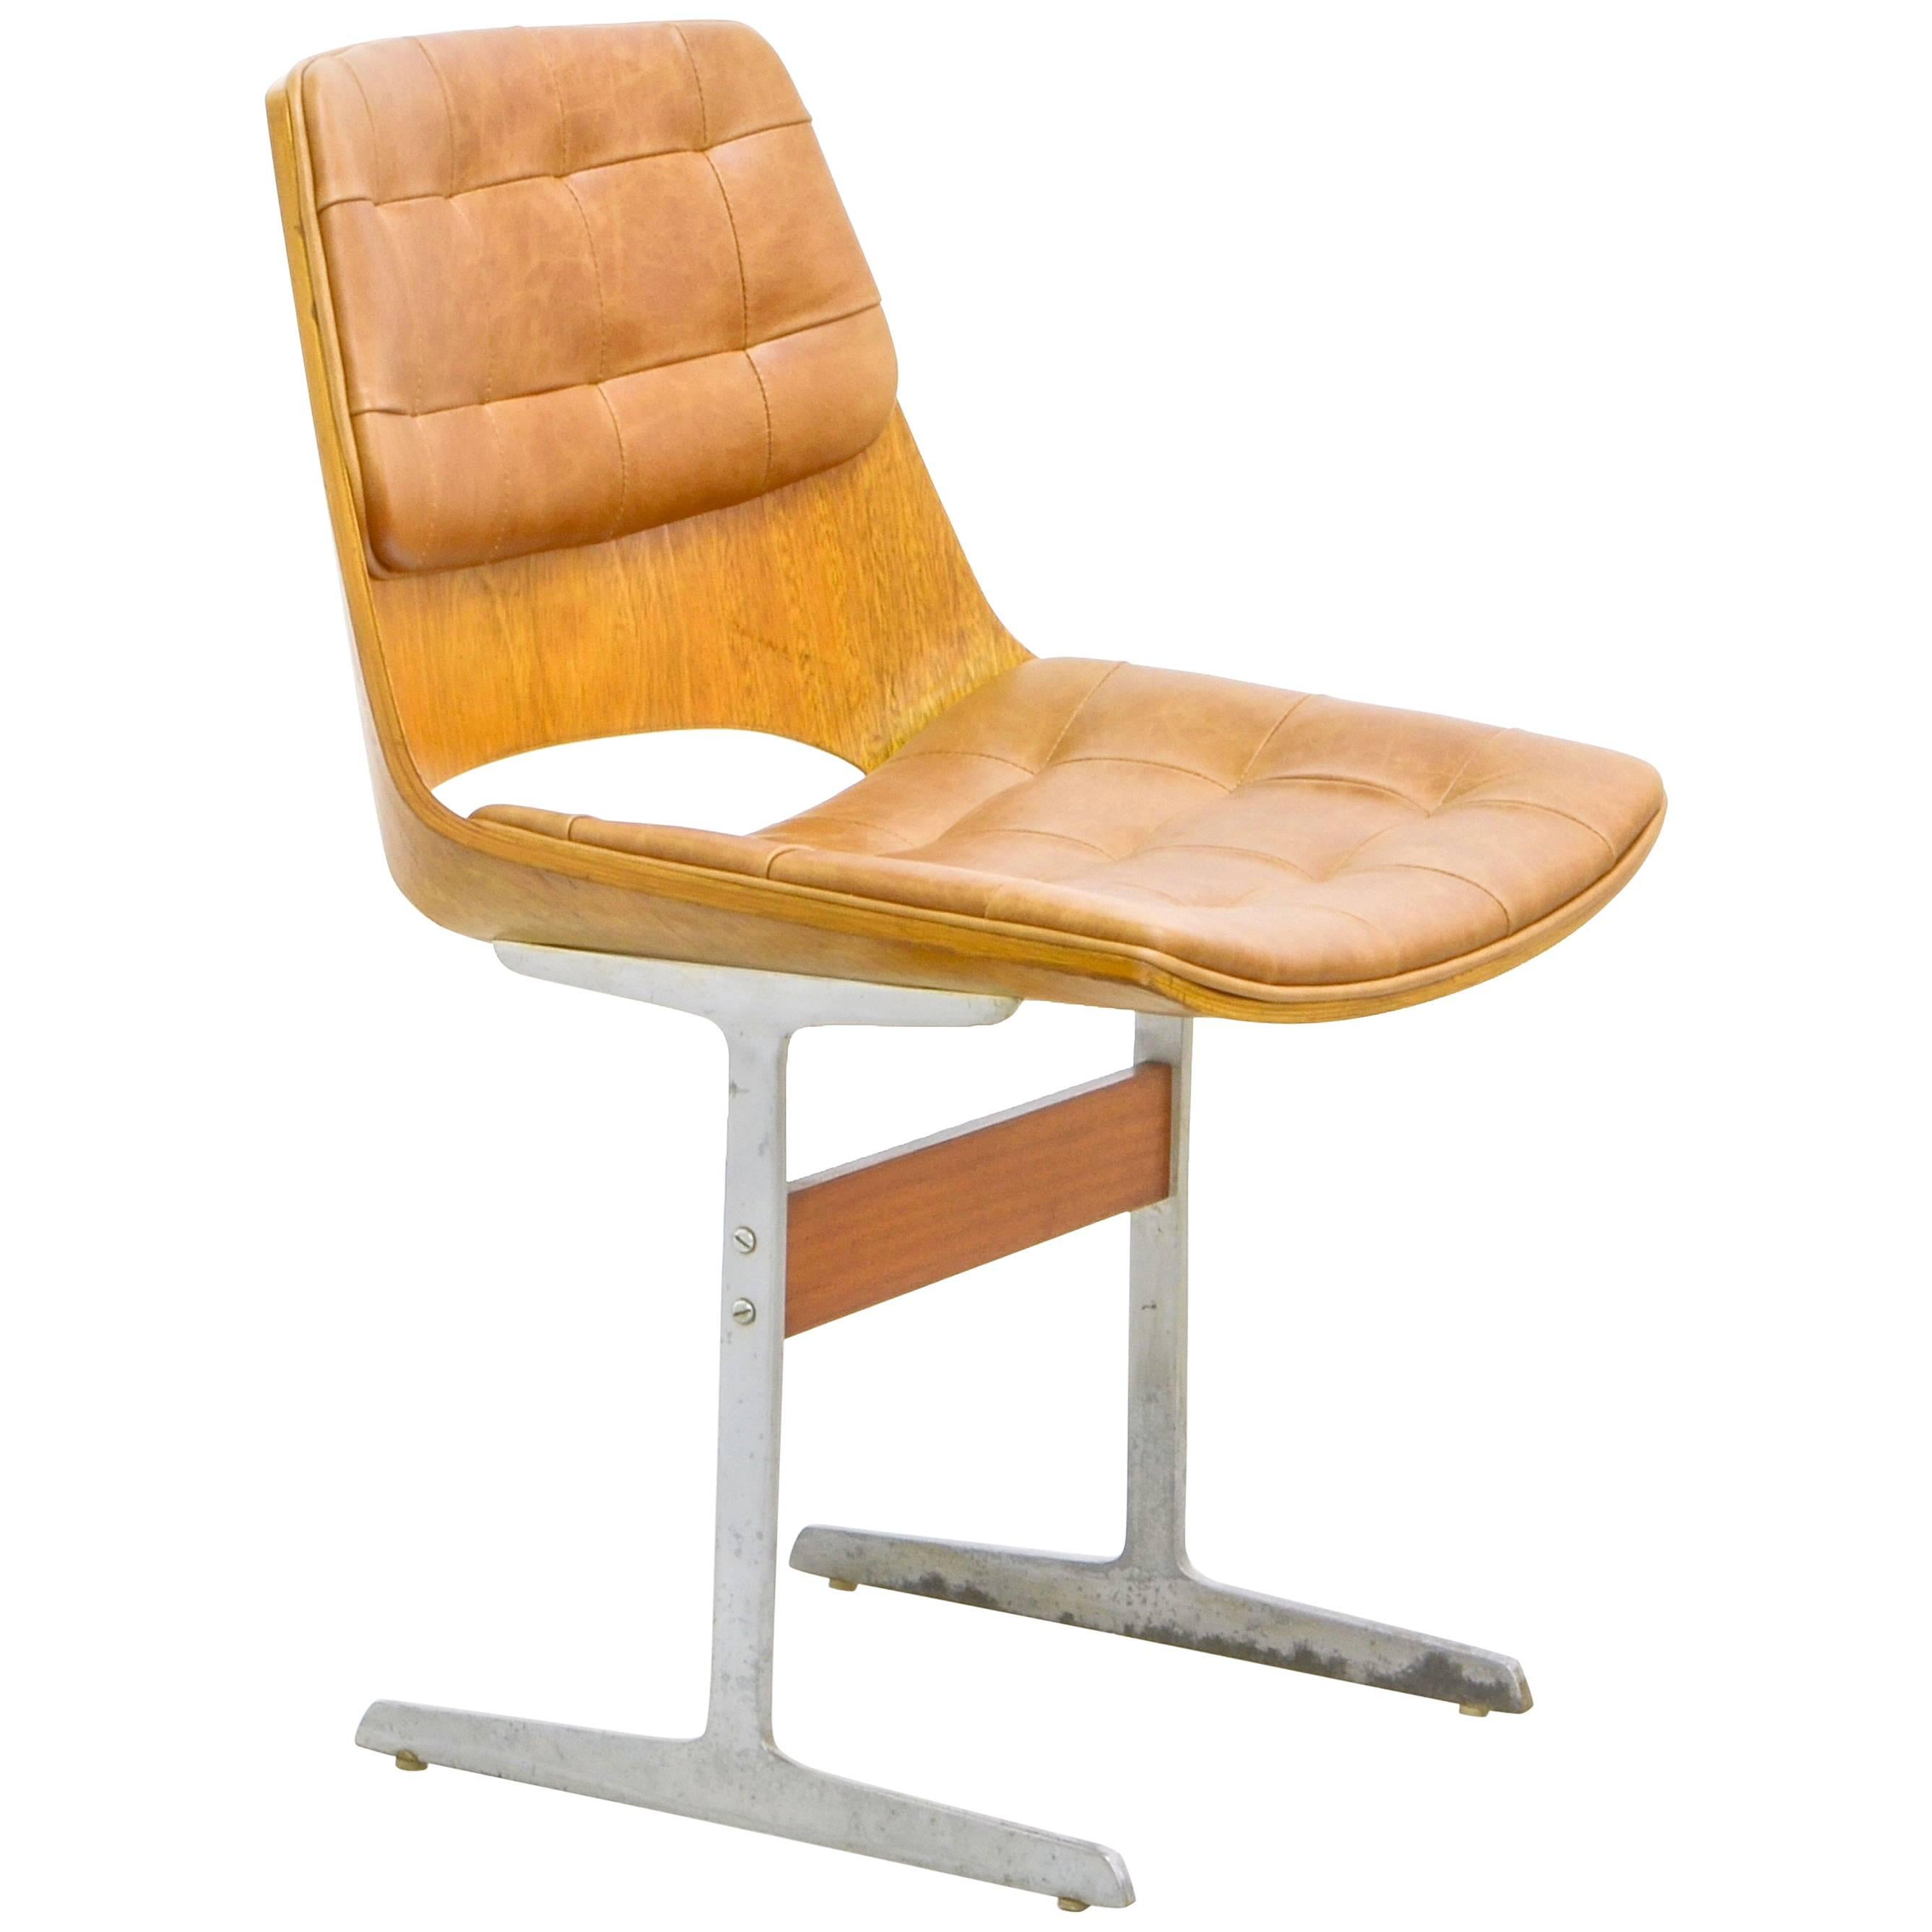 "Marina" Side Chair, Jorge Zalszupin, Brazilian Midcentury